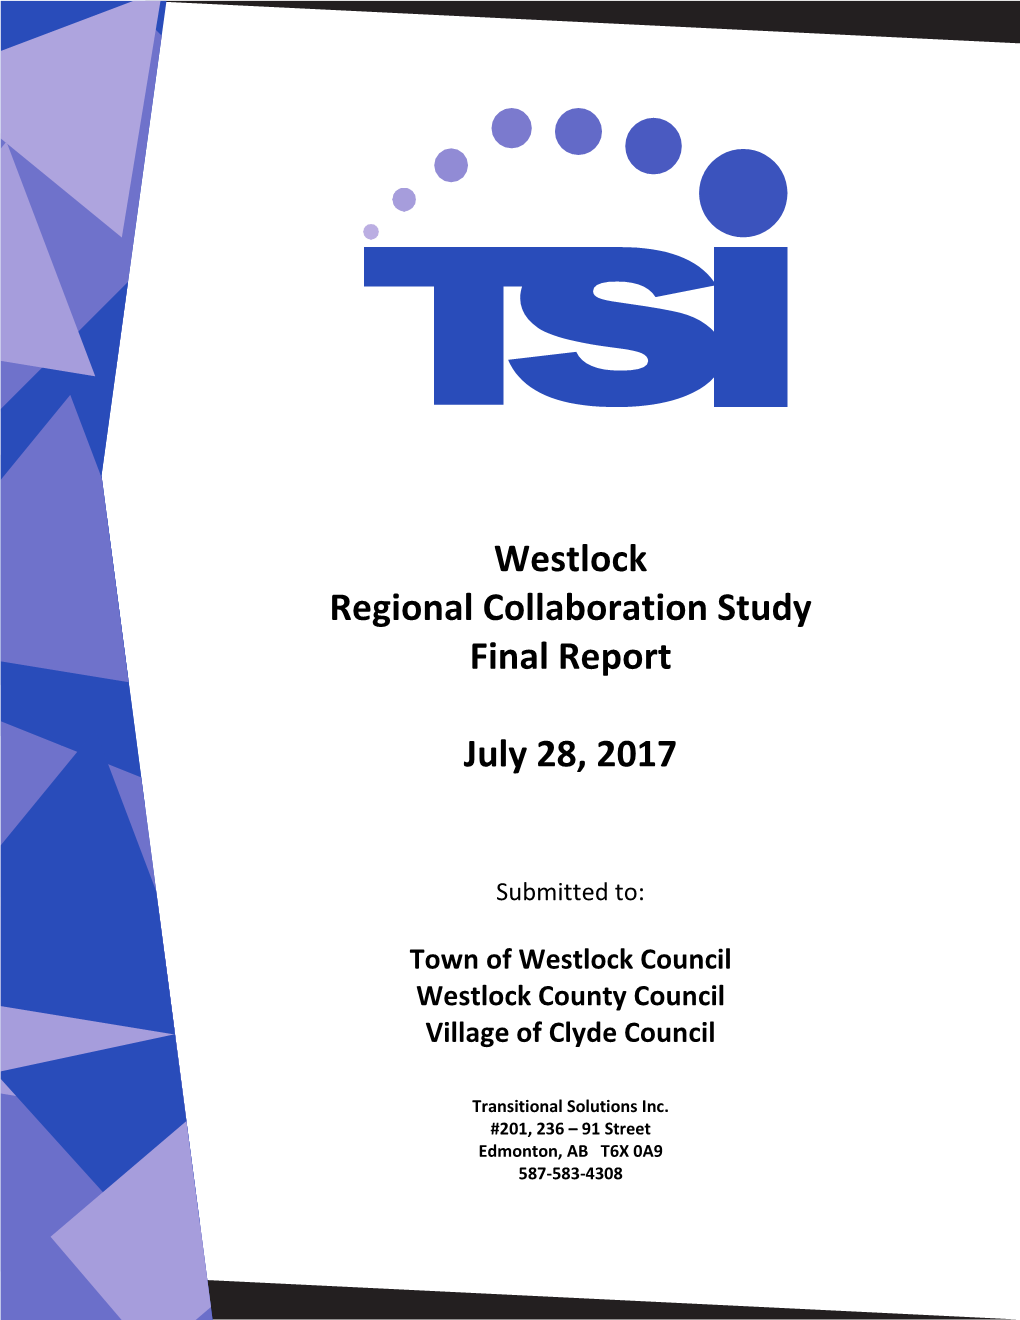 Westlock Regional Collaboration Study Final Report